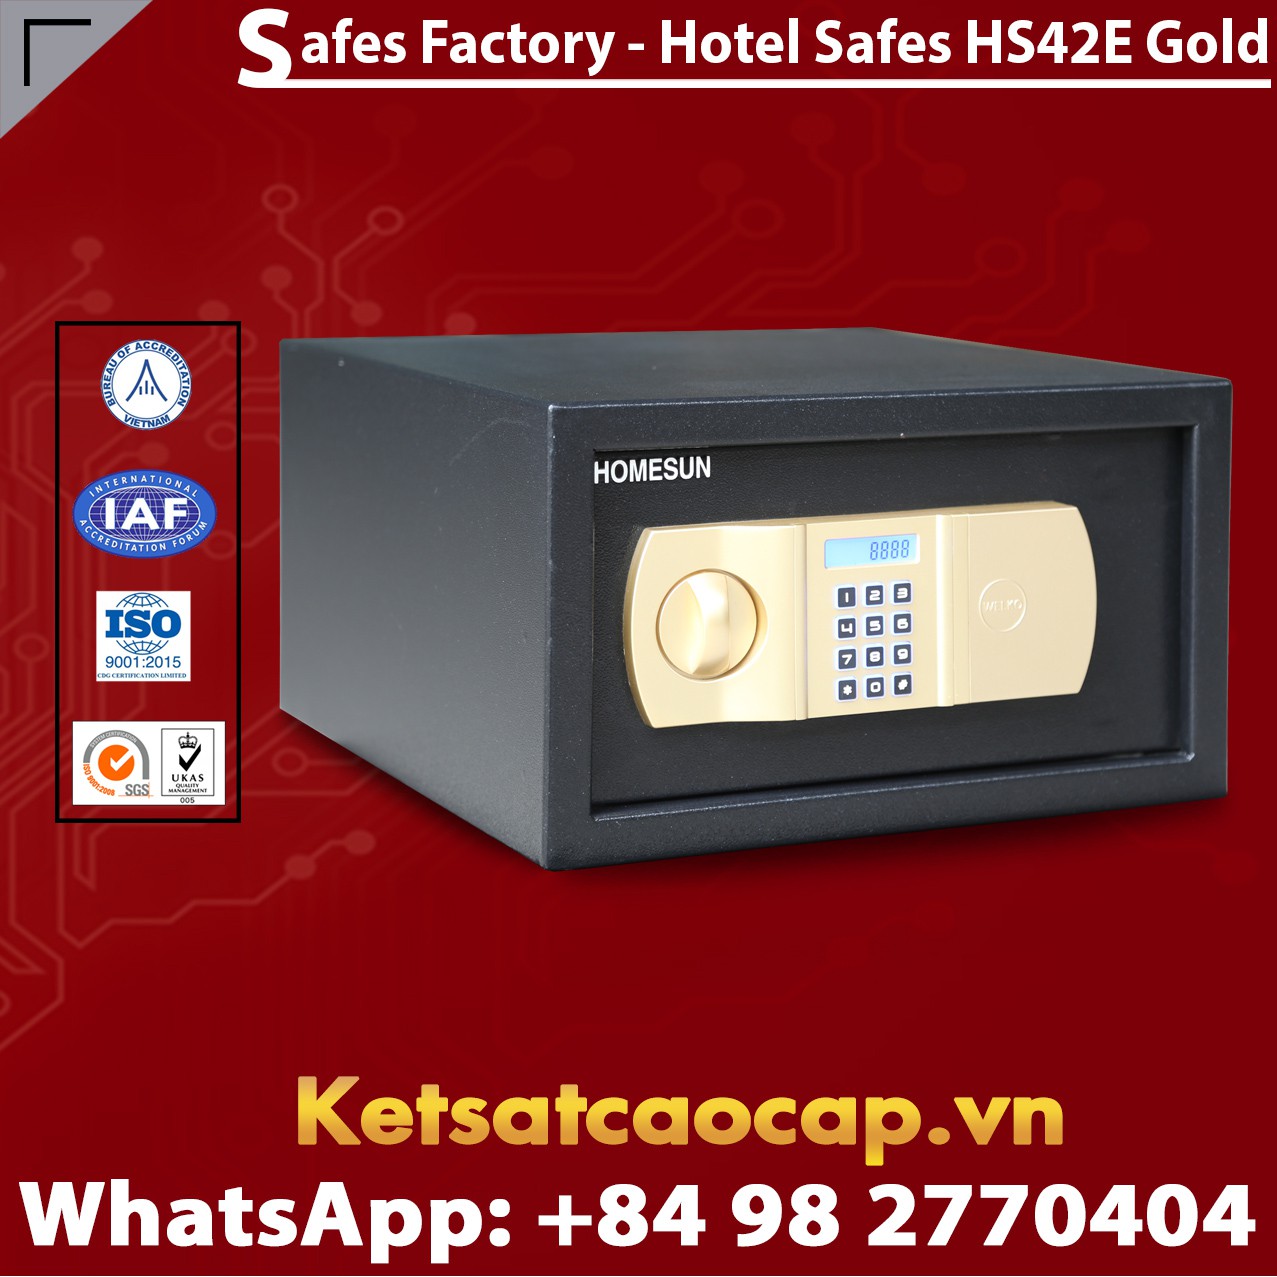 Hotel Room Security HOMESUN HS42 E Gold